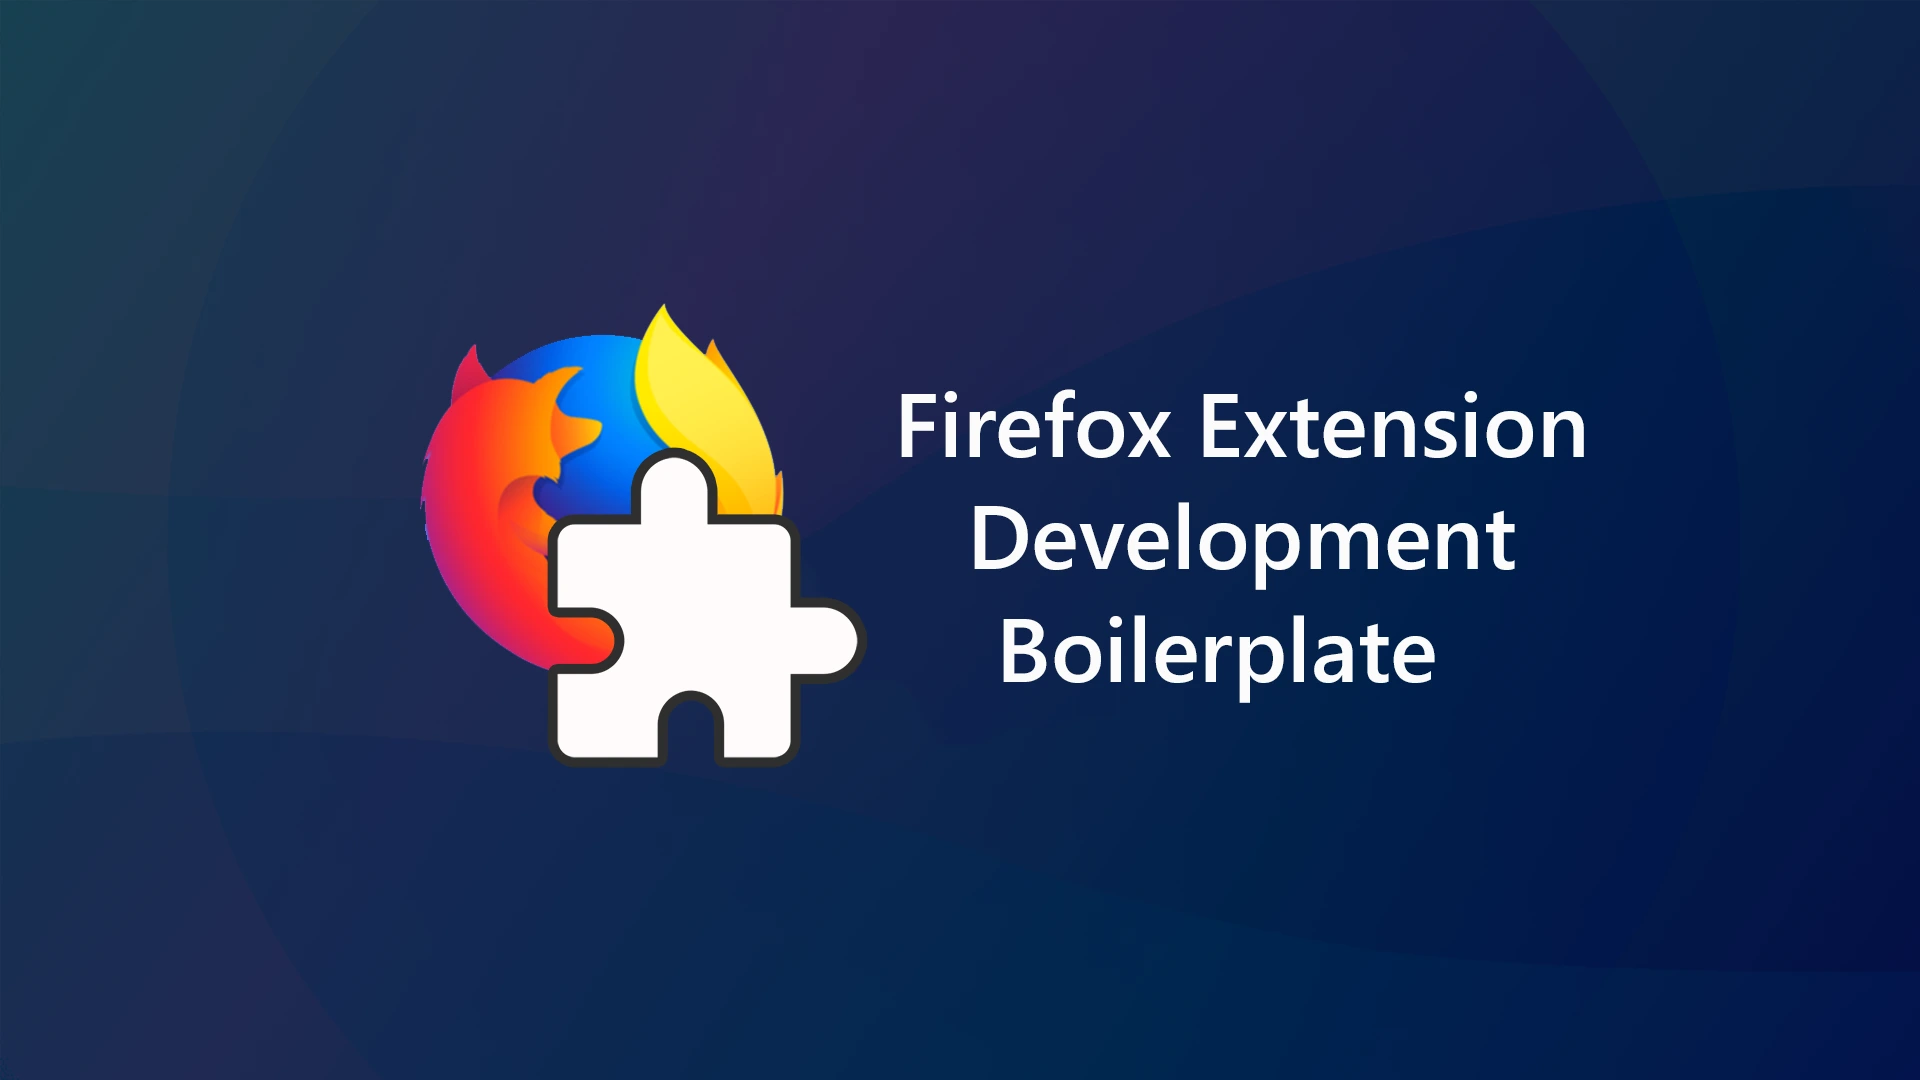 Firefox extension boilerplate